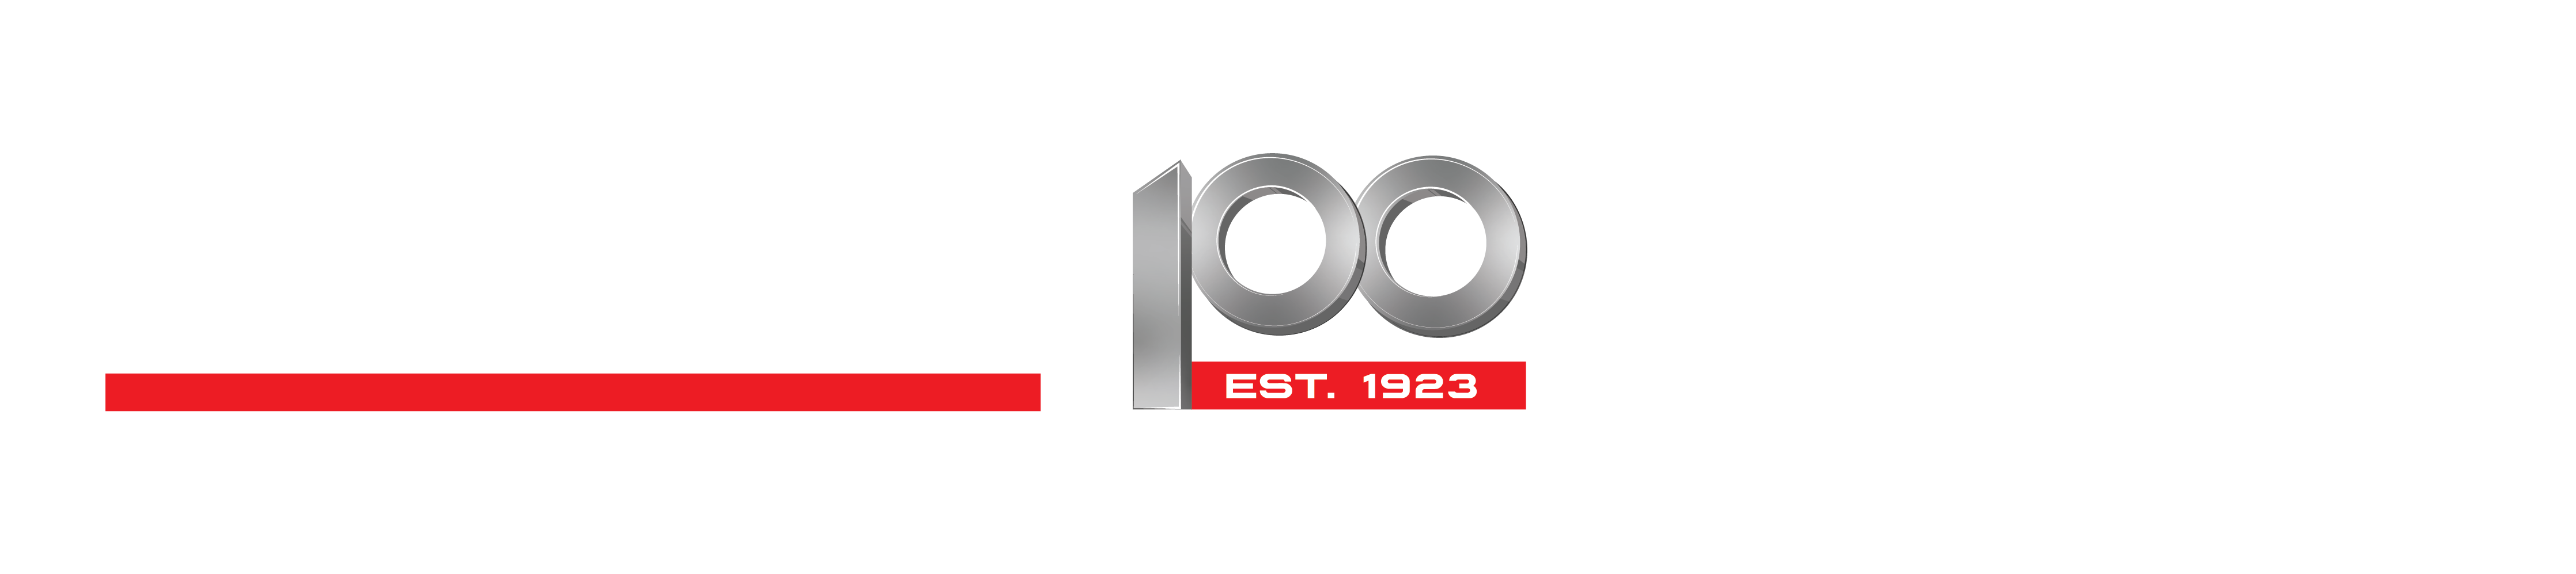 RIDGID® 100 Established 1923: Built For What's Next™